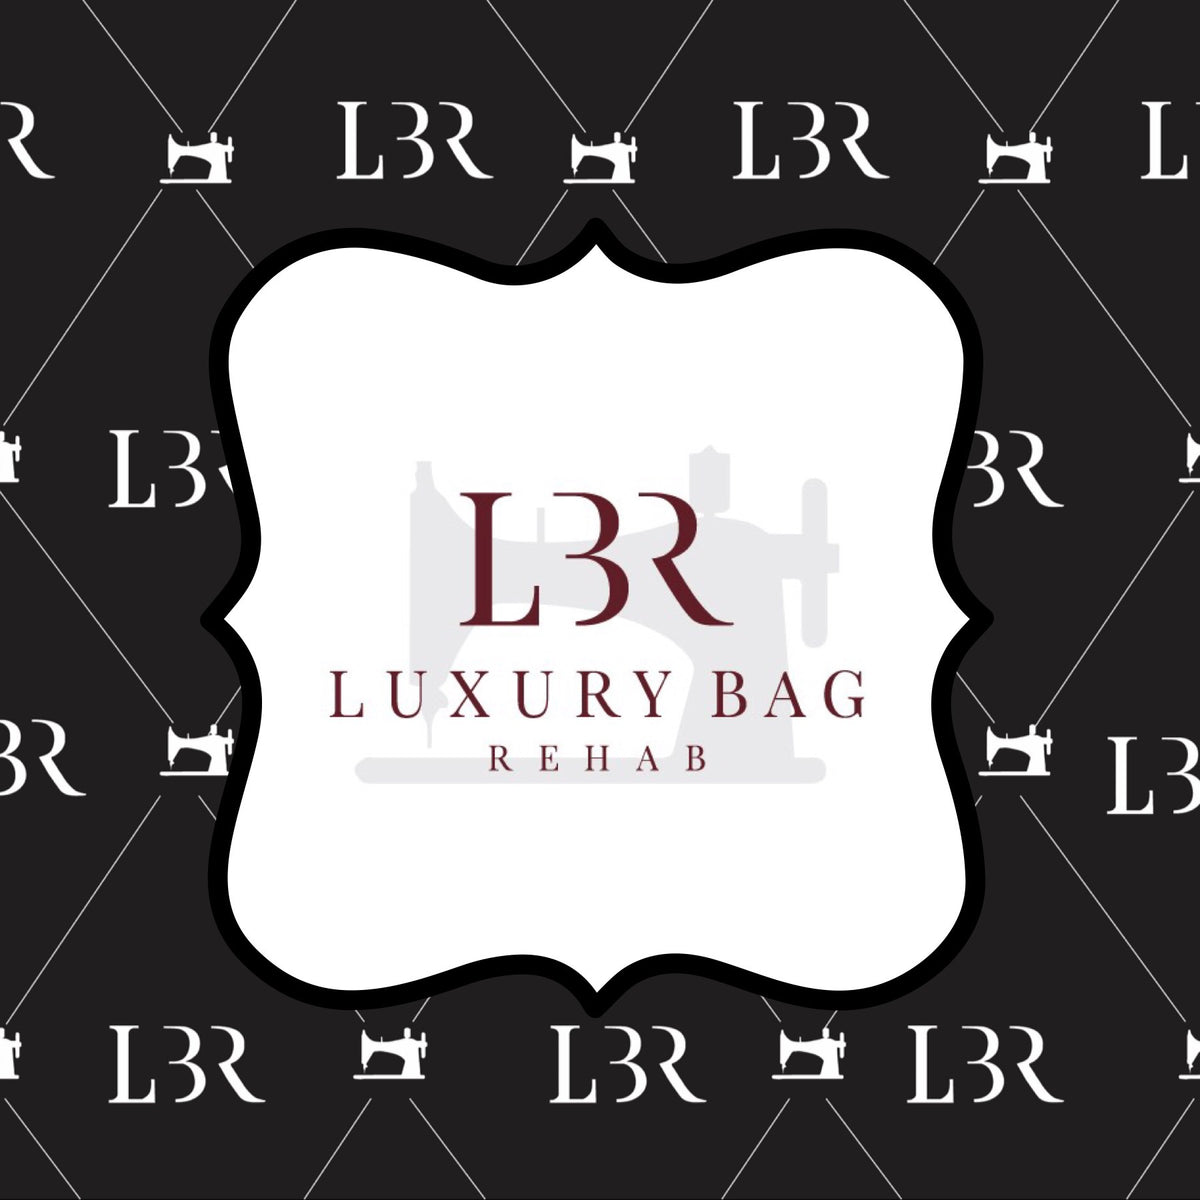 shogun restorations page – Luxury Bag Rehab